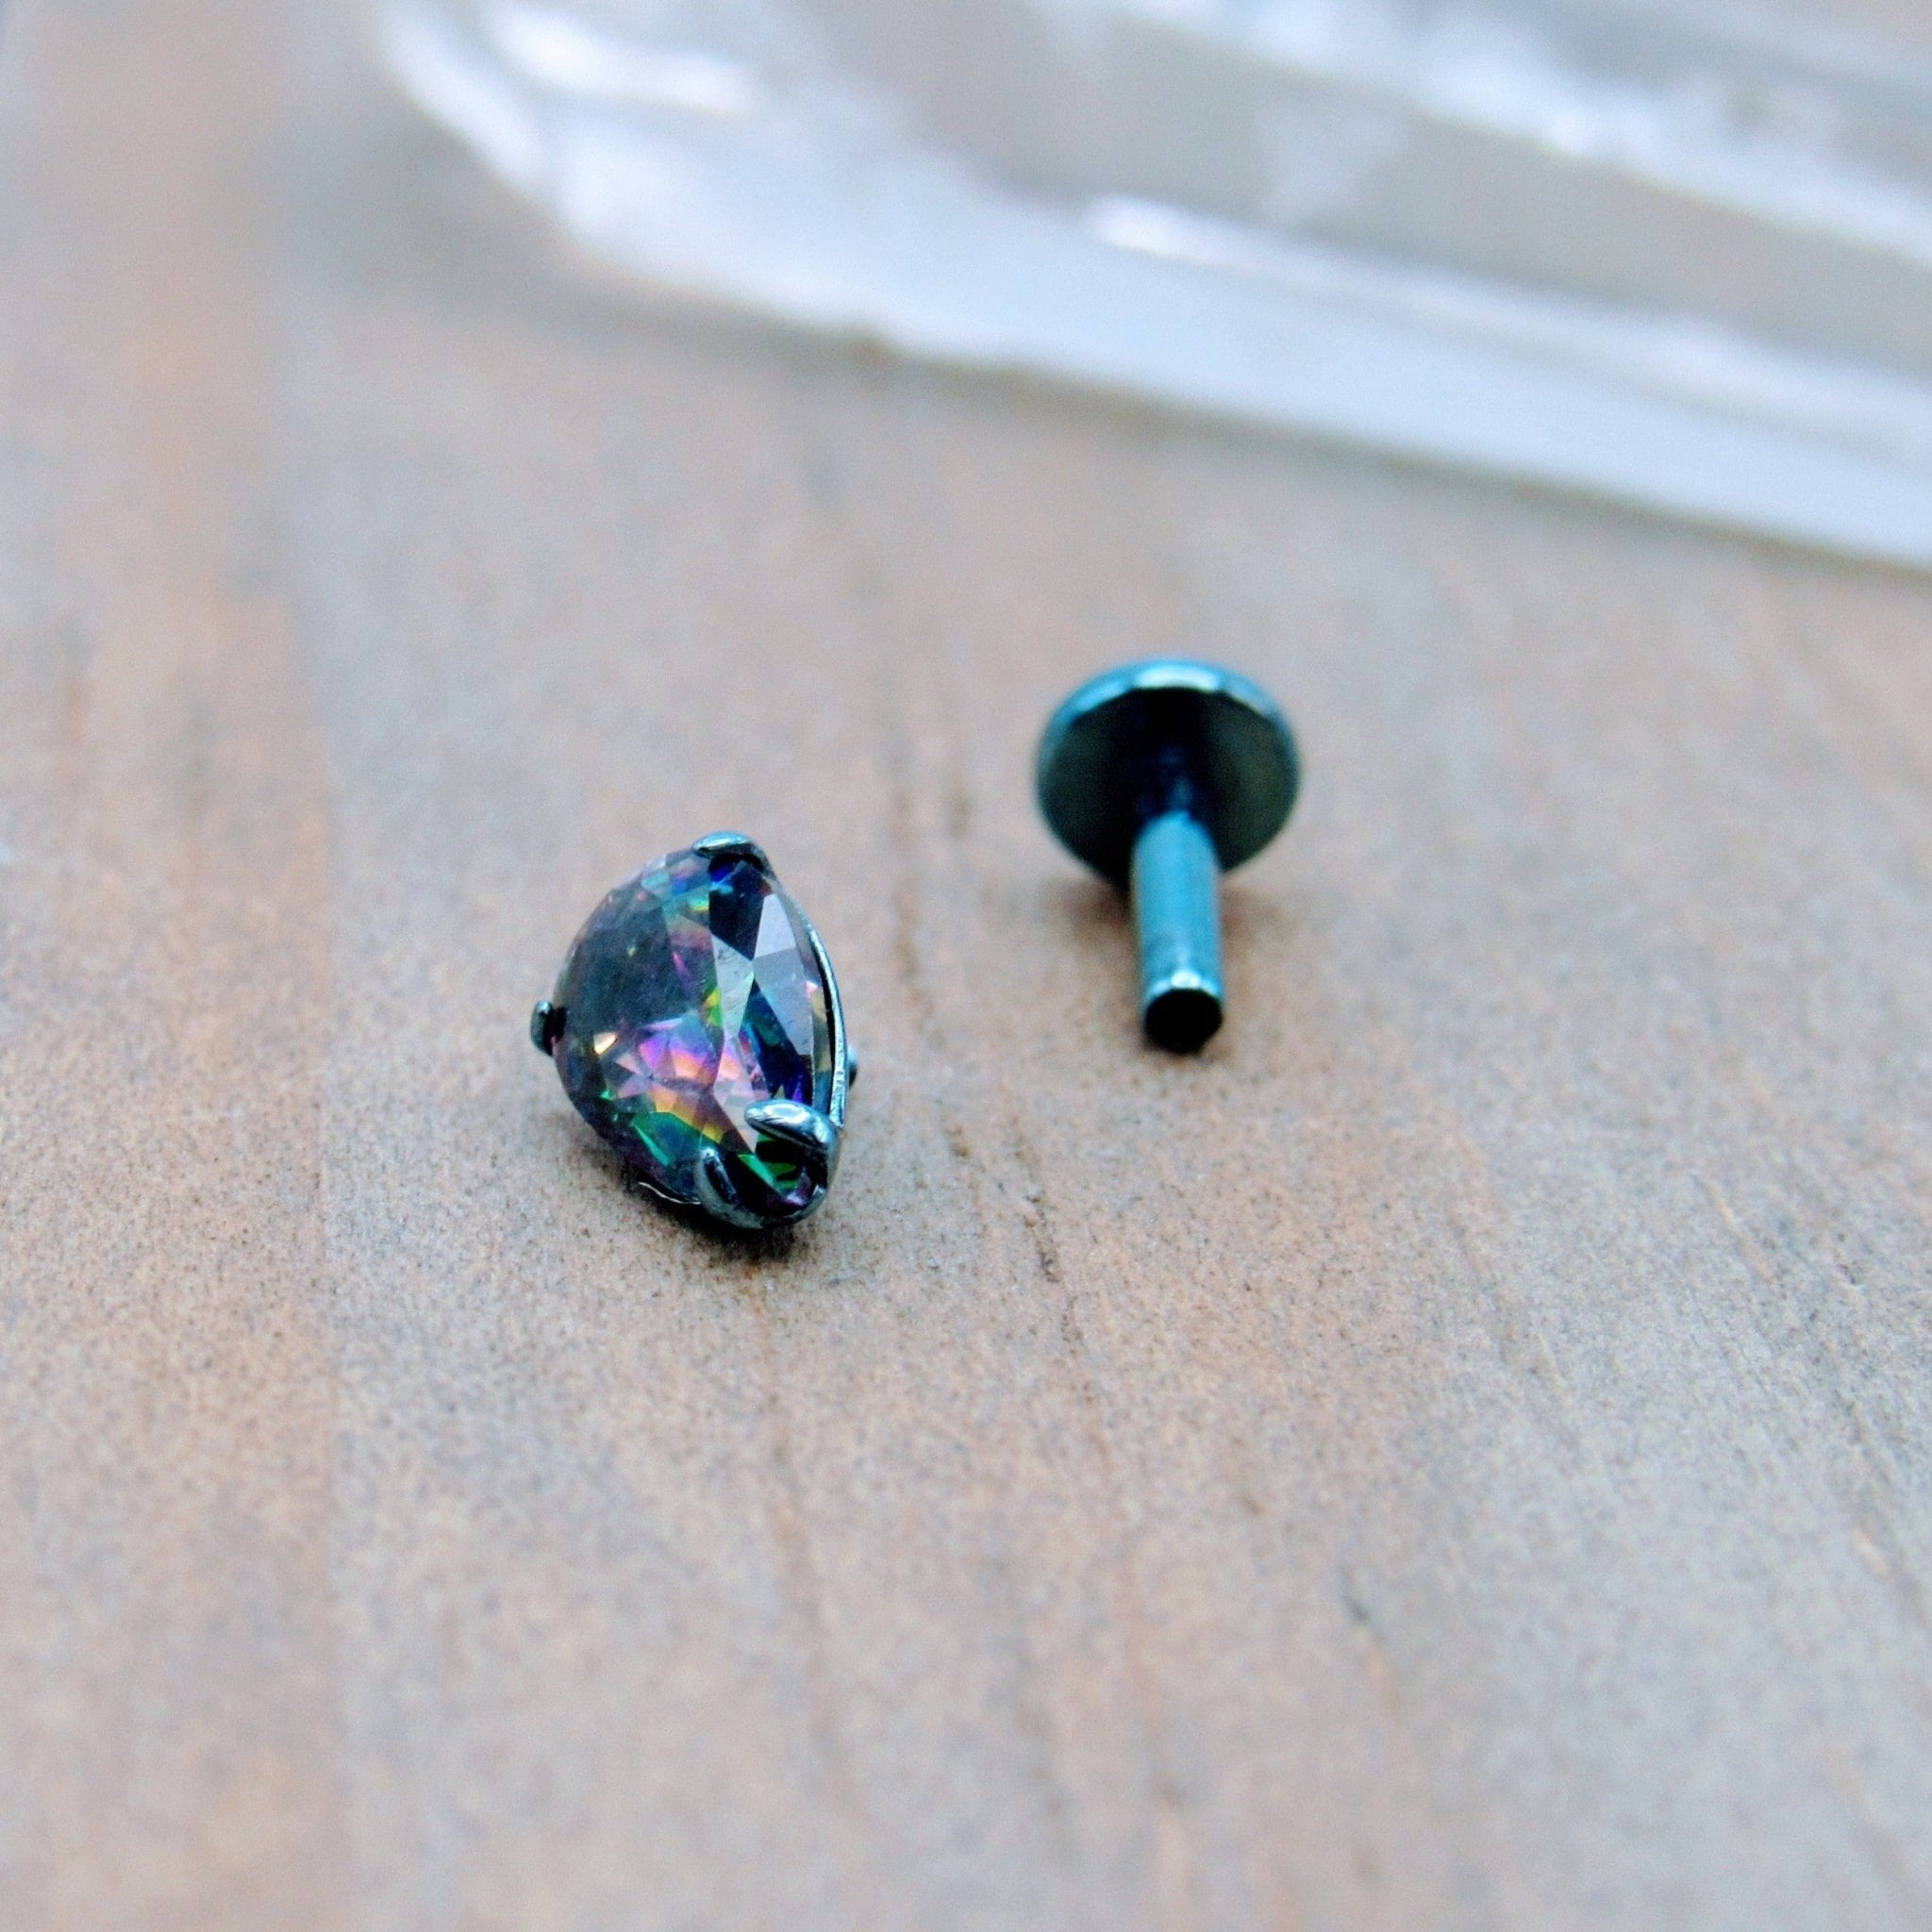 16g Titanium pear shaped mystic topaz gemstone flat back labret earring  stud helix conch philtrum body jewelry stud